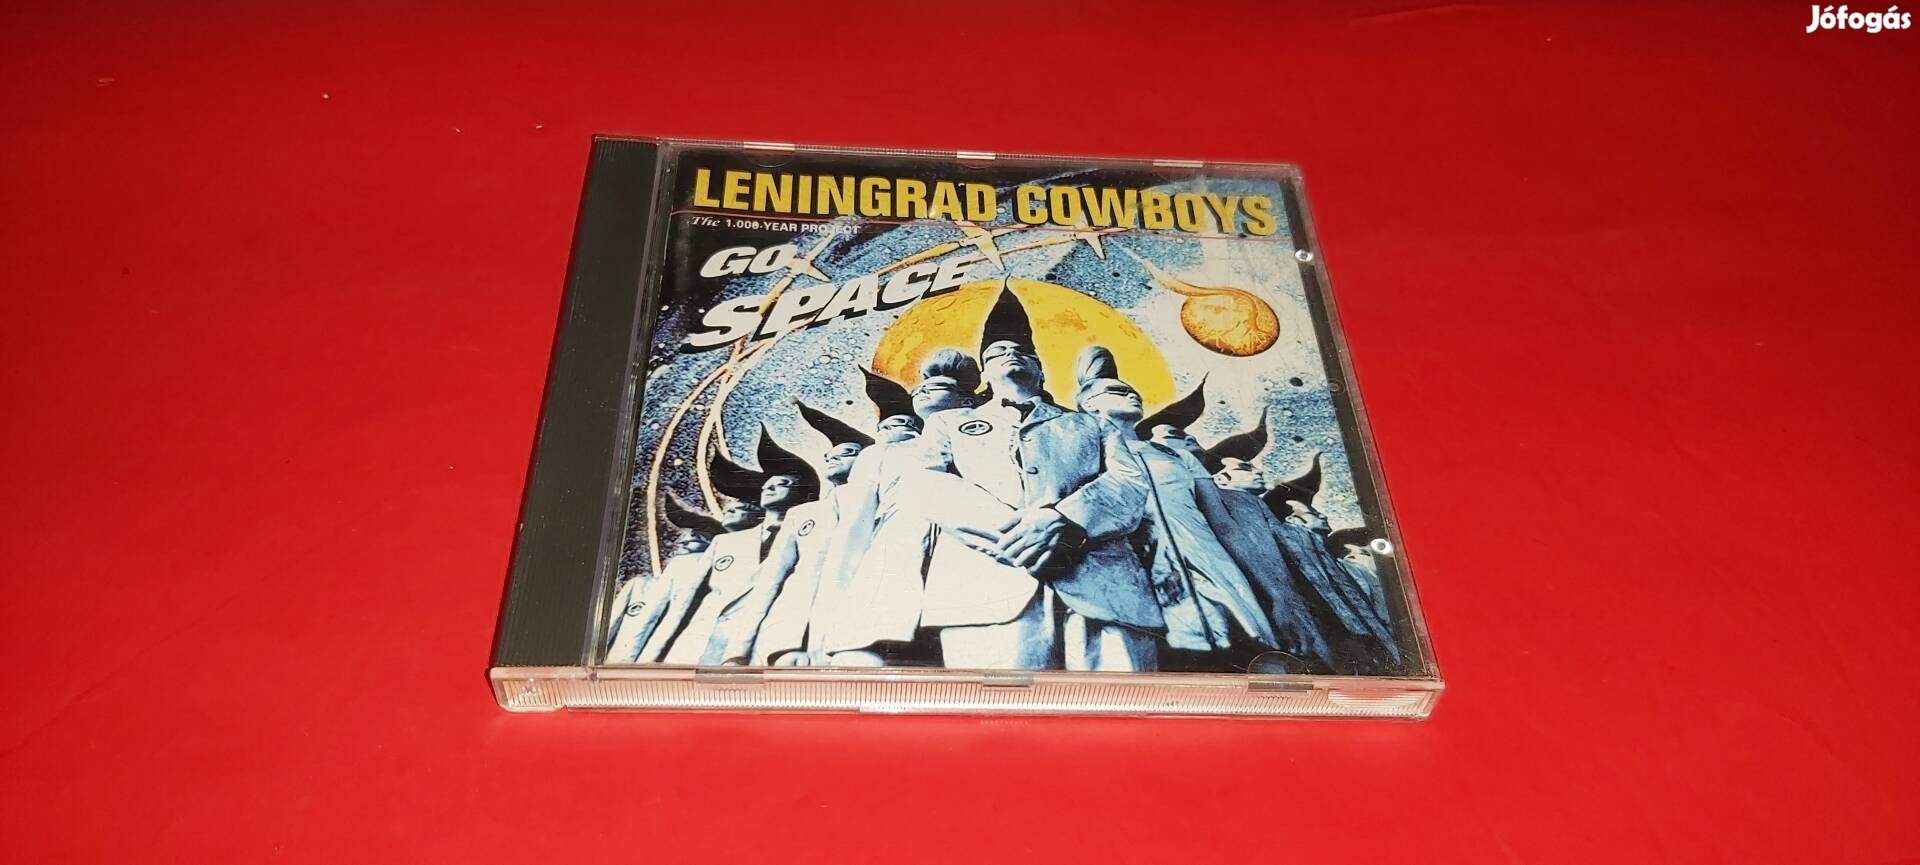 Leningrad Cowboys Go space Cd 1996